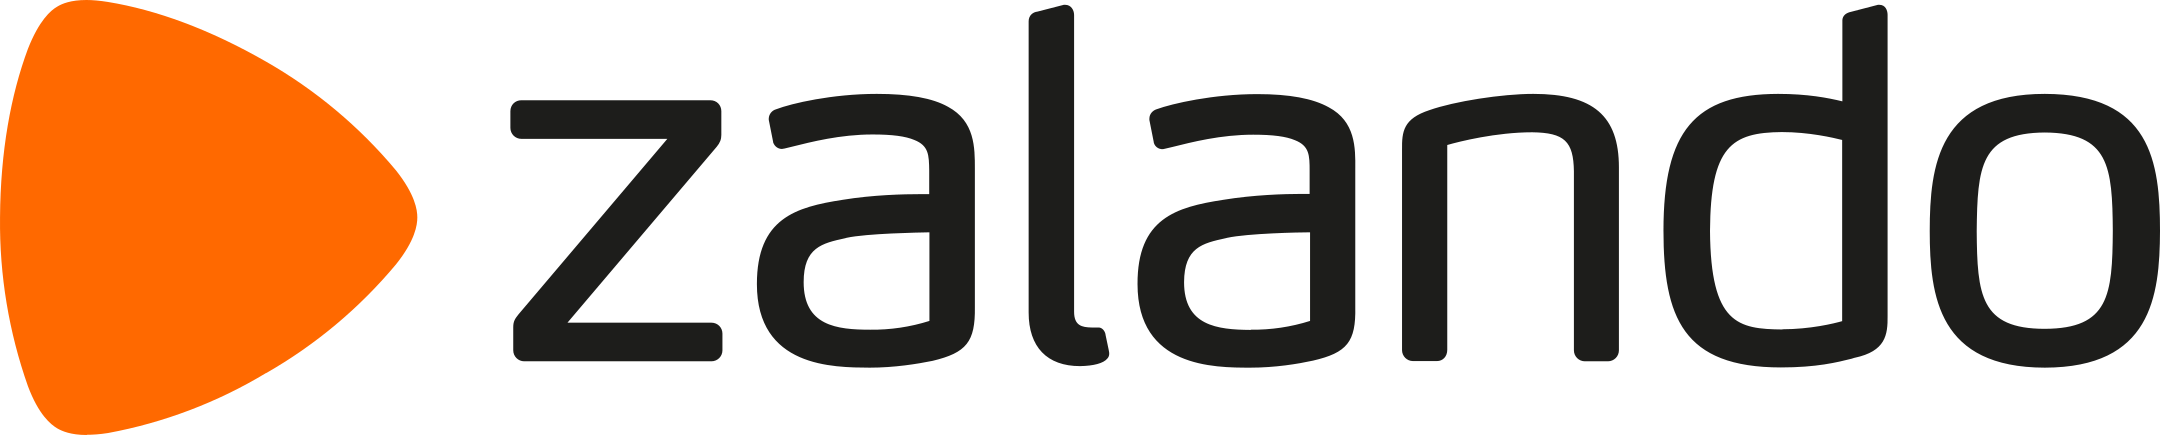 zalando logo 1 - Zalando Logo